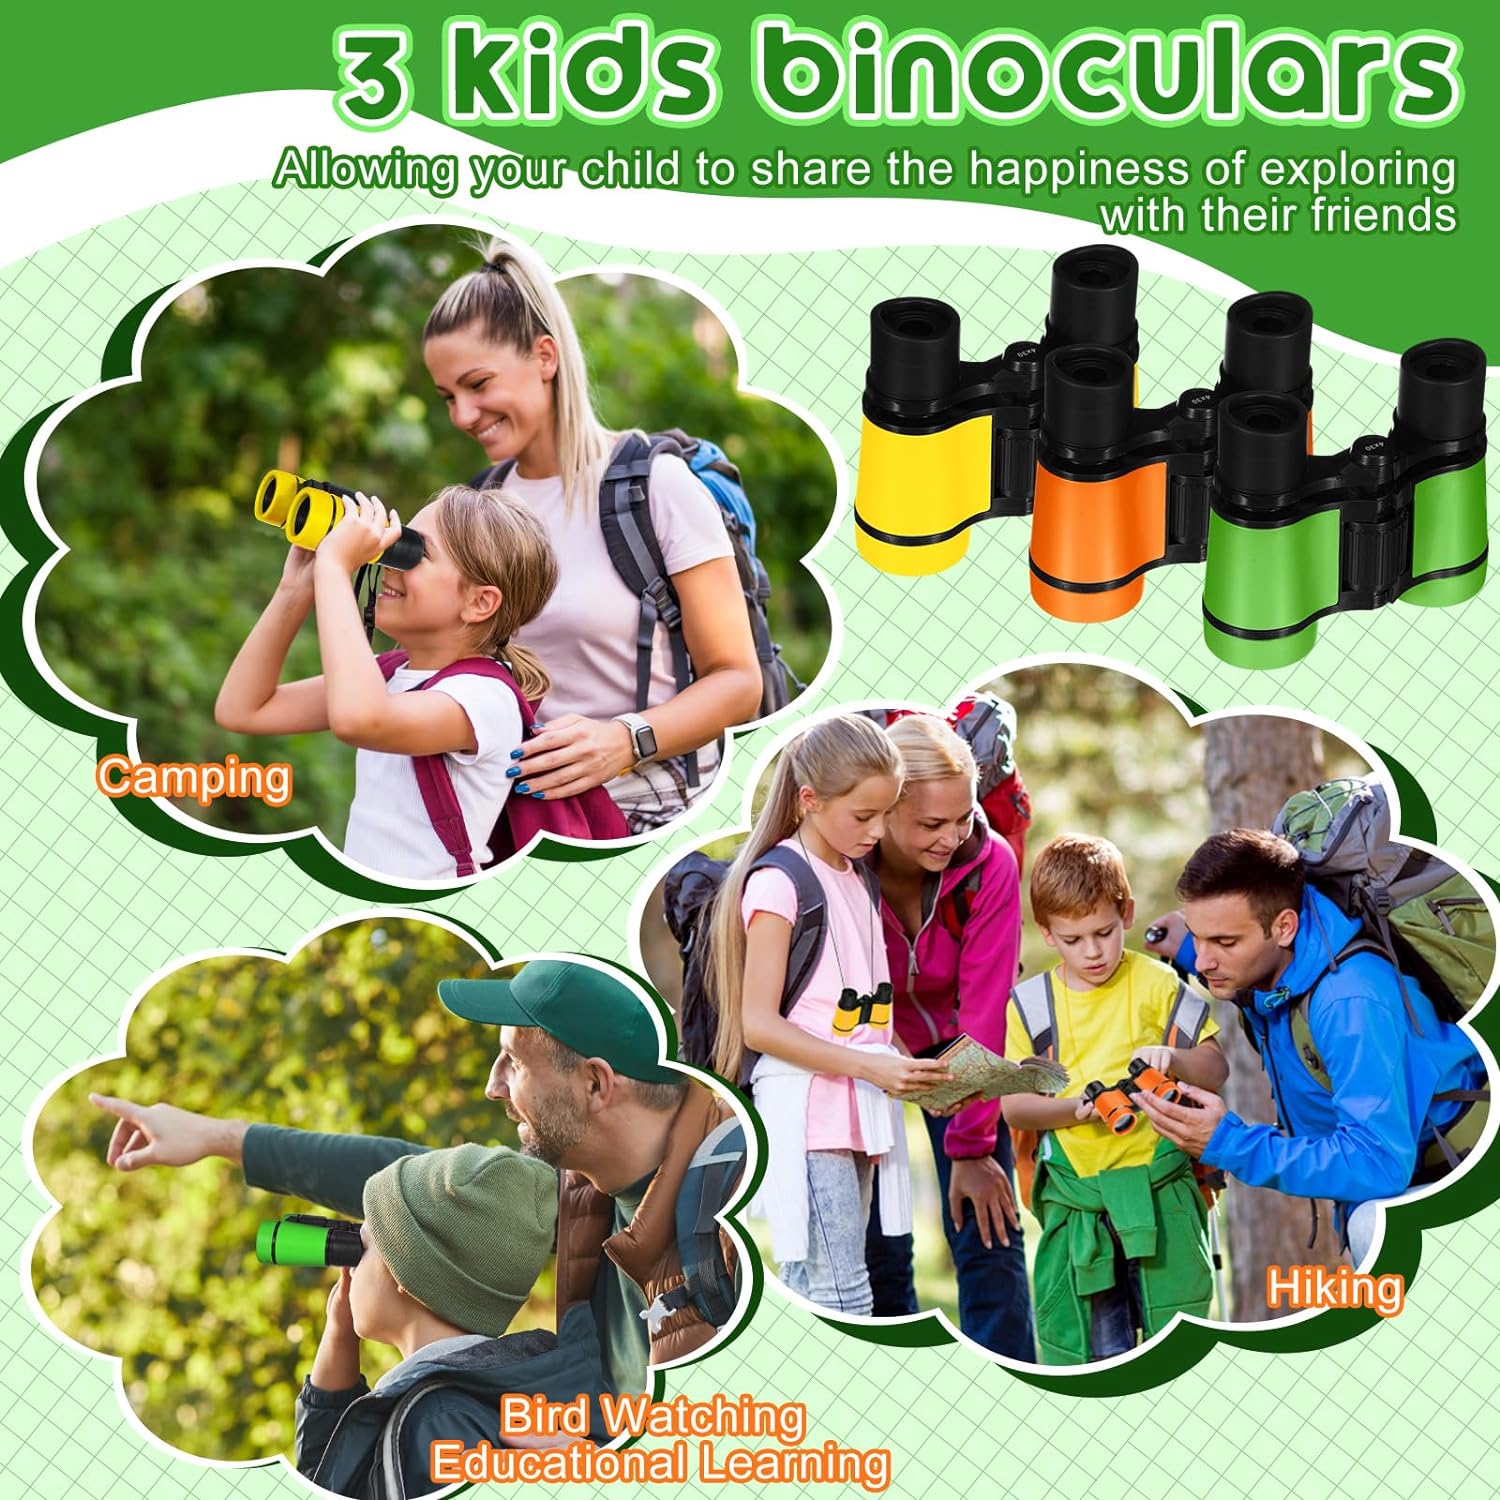 Halloscume 3 Pcs Kids Binoculars Shock Proof Mini Binoculars Gifts for Age 6-12 Years Old Boys Girls Bird Watching Educational Learning Camping Hiking Birthday Presents(Green, Orange, Yellow)